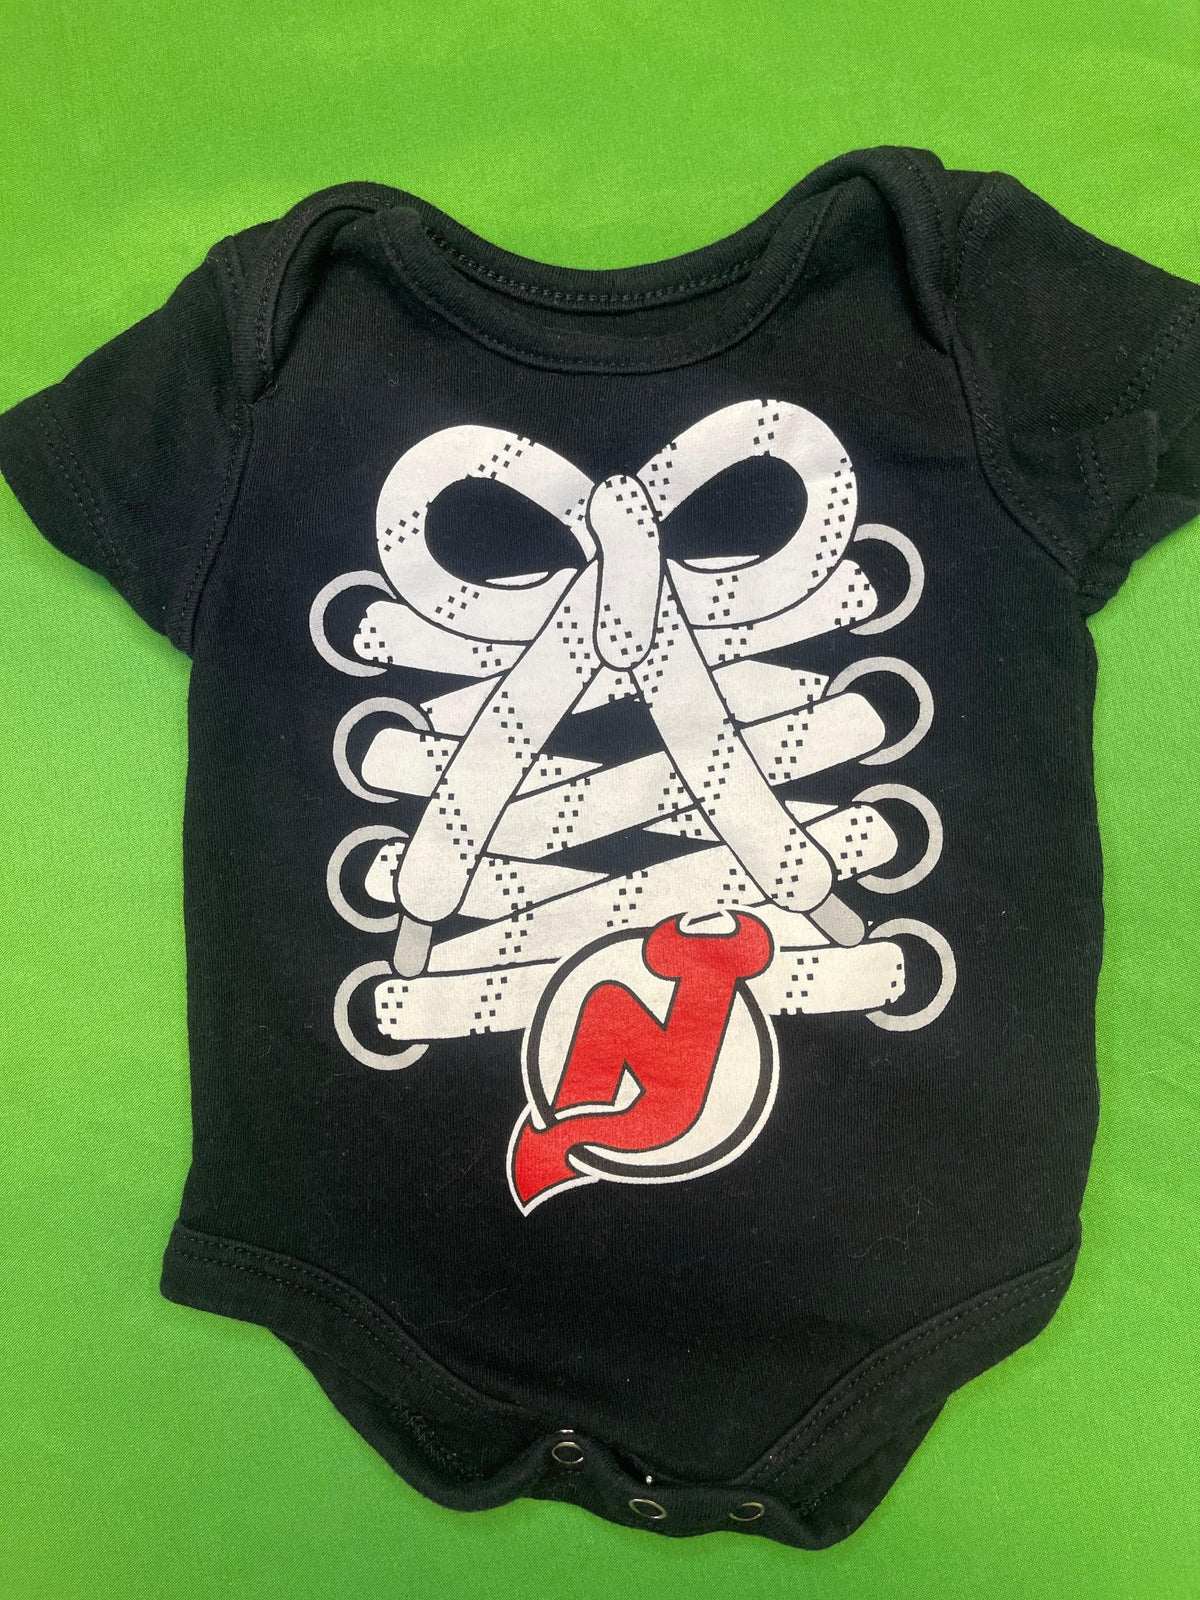 NHL New Jersey Devils Infant Bodysuit/Vest Newborn 0-3 months